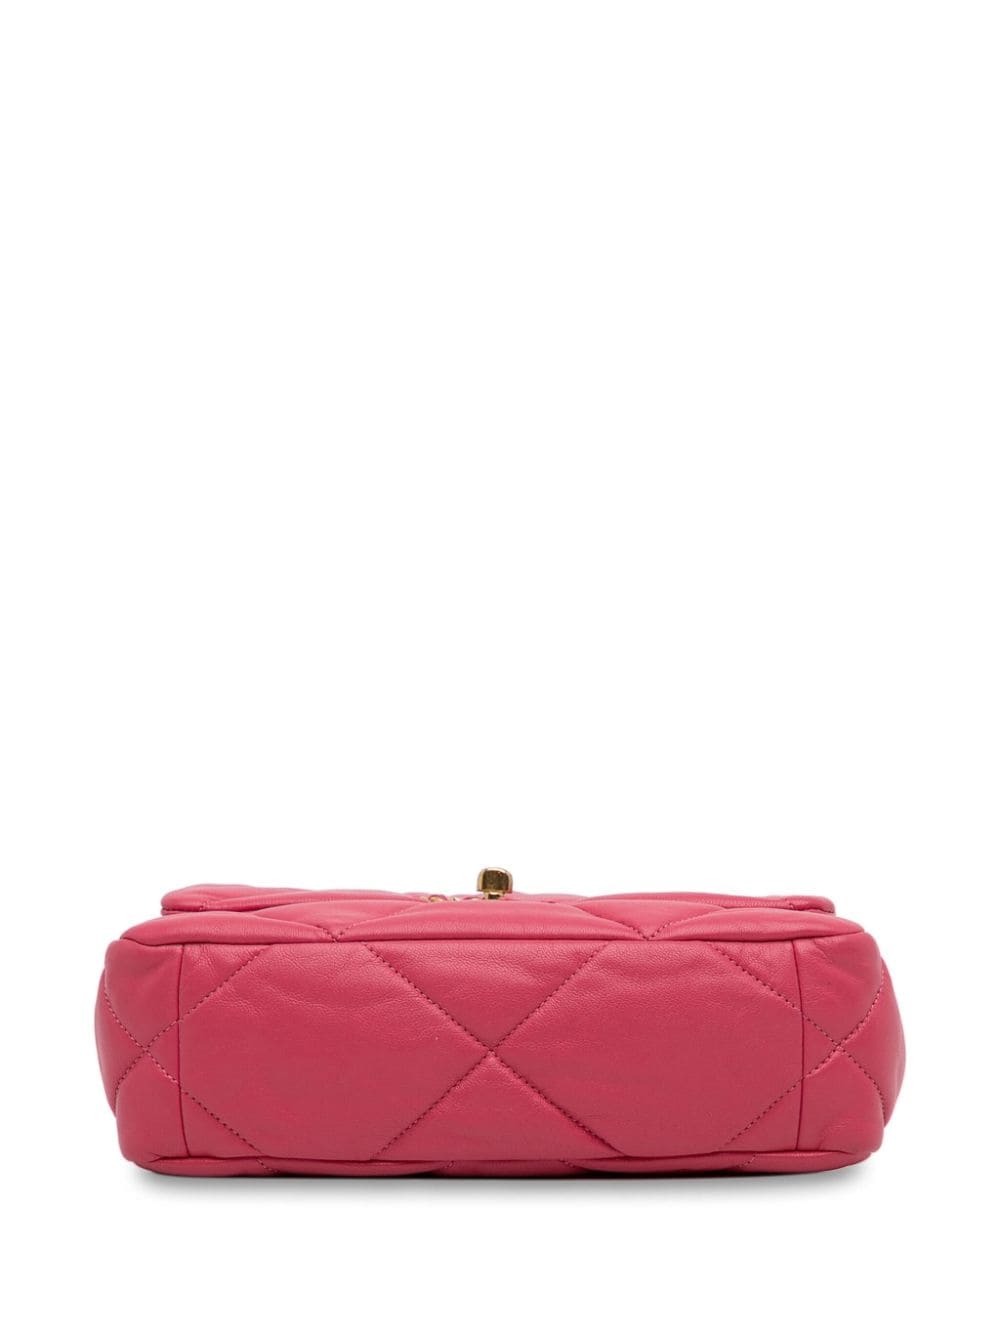 Pre-owned Chanel 2019 Medium Lambskin 19 Flap Bag Satchel In Pink